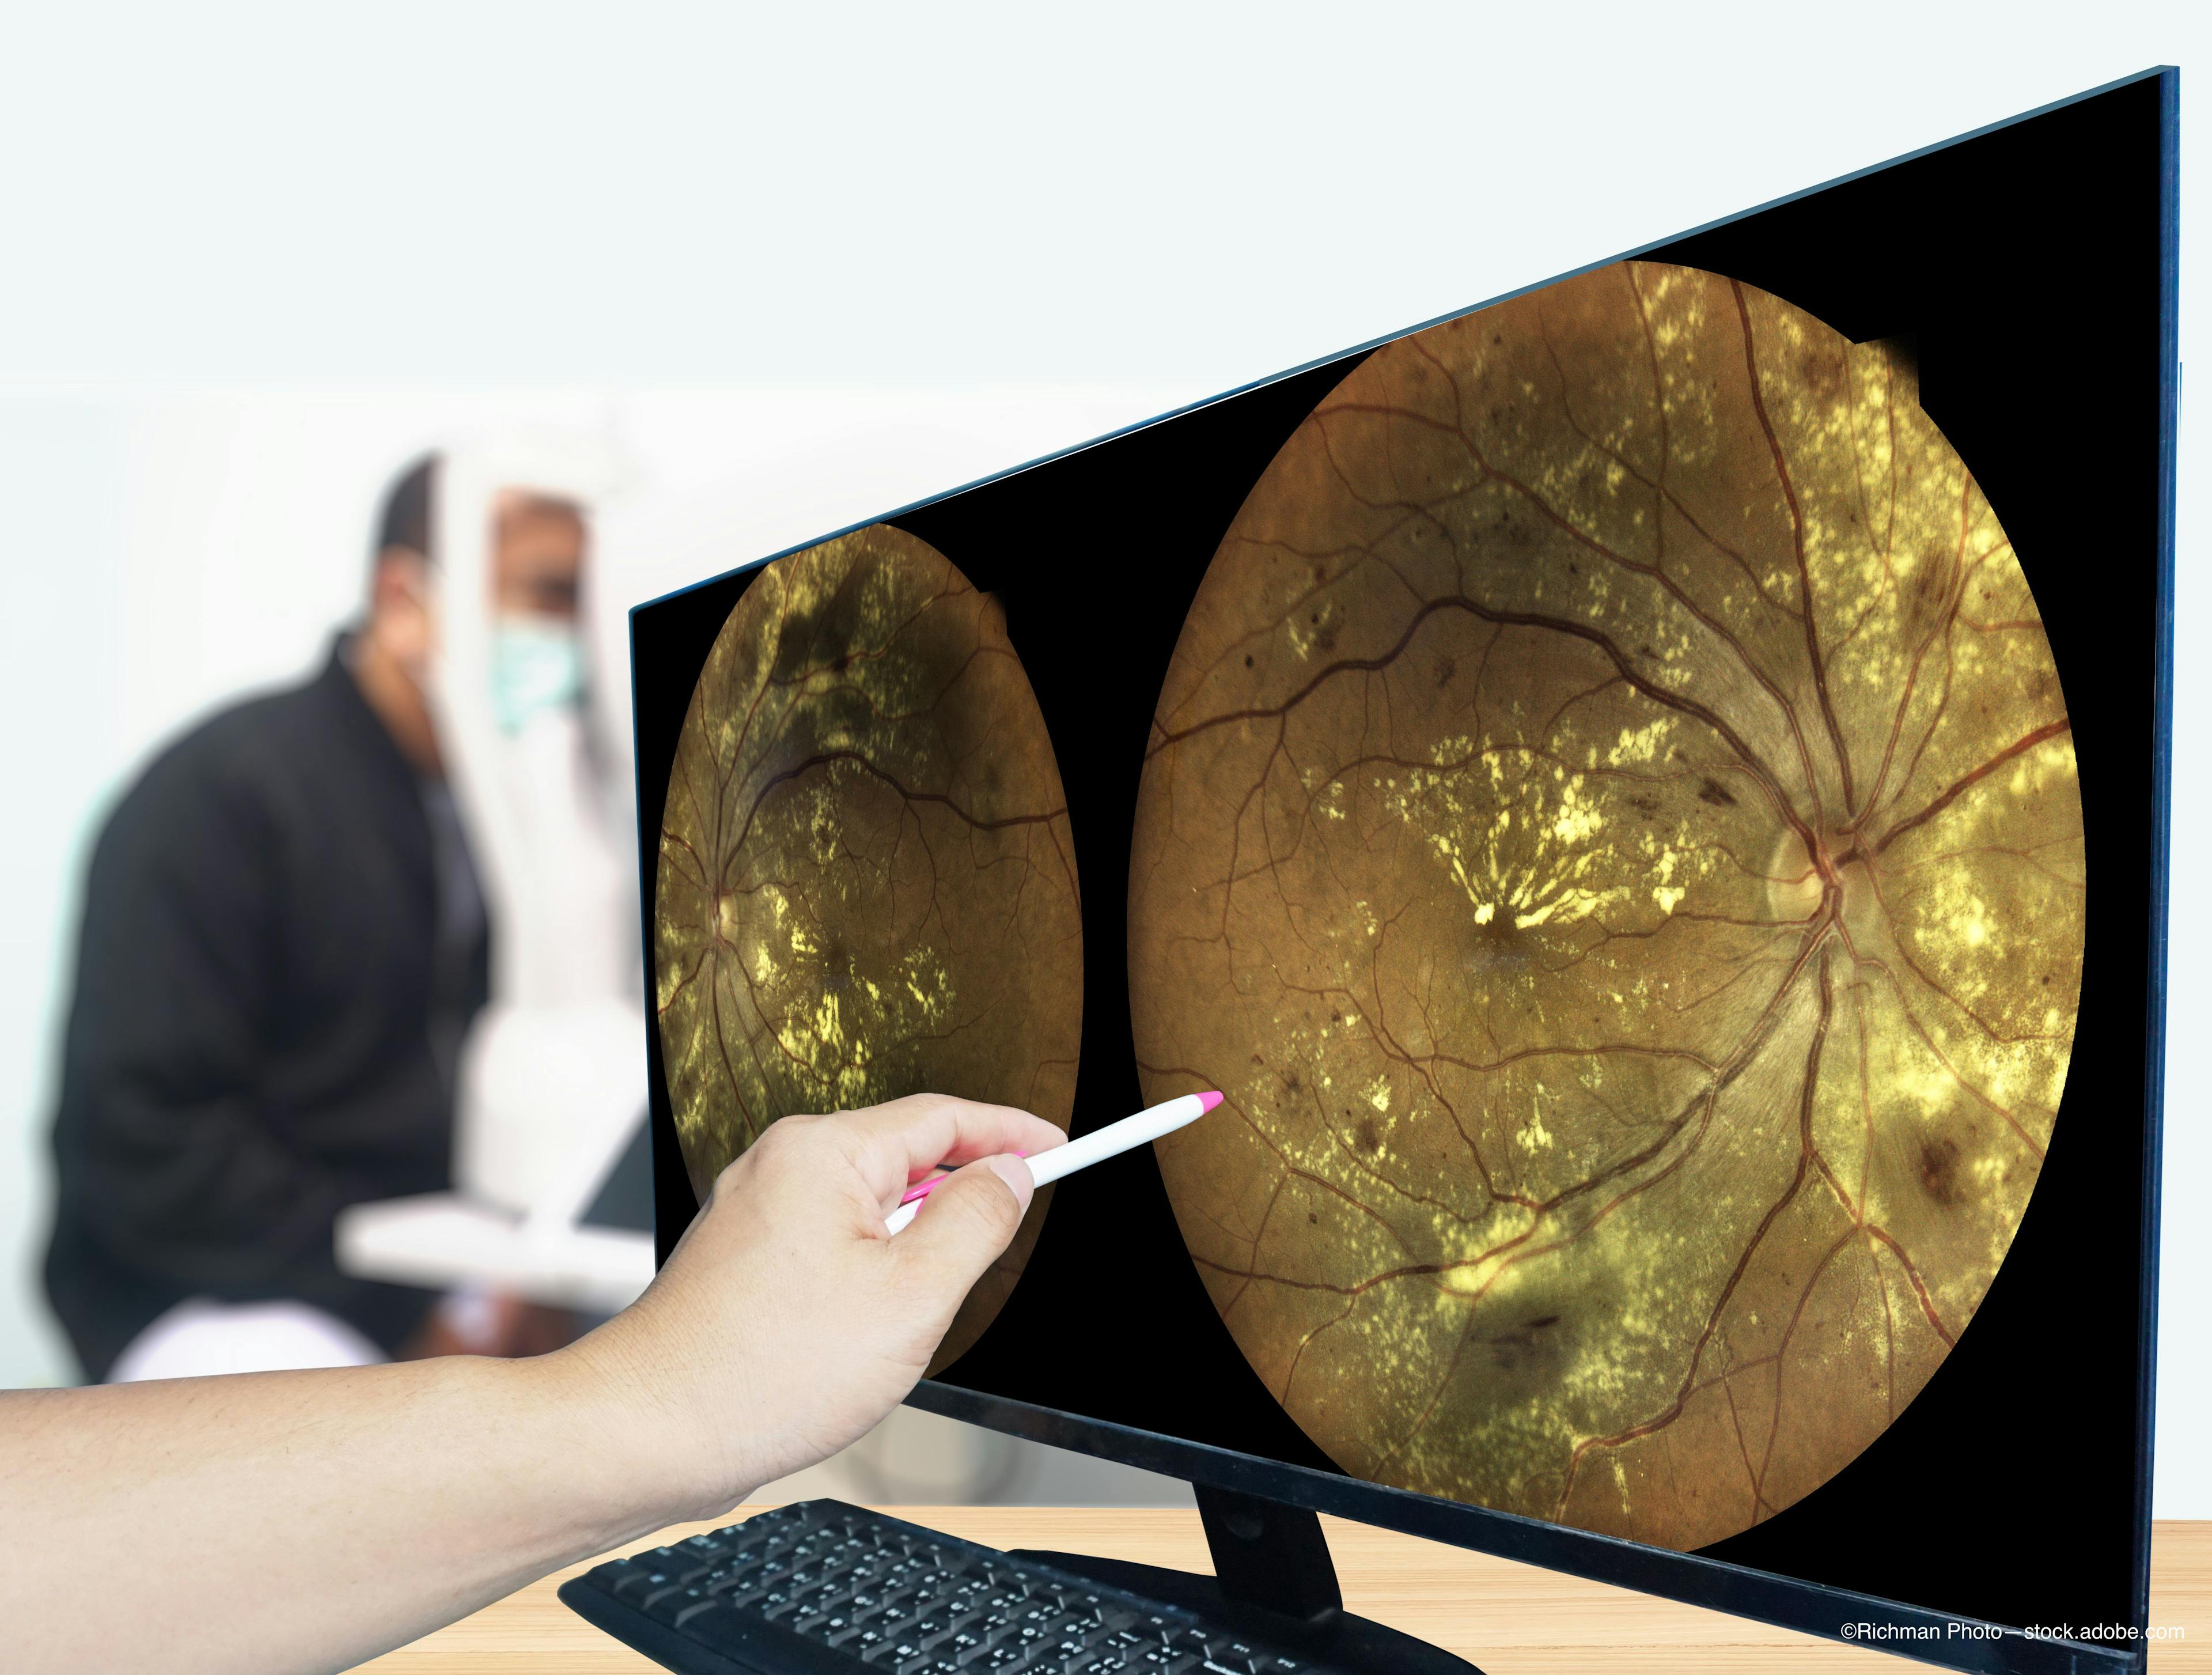 Managing diabetic eye disease eased with repeatable, high-quality imaging